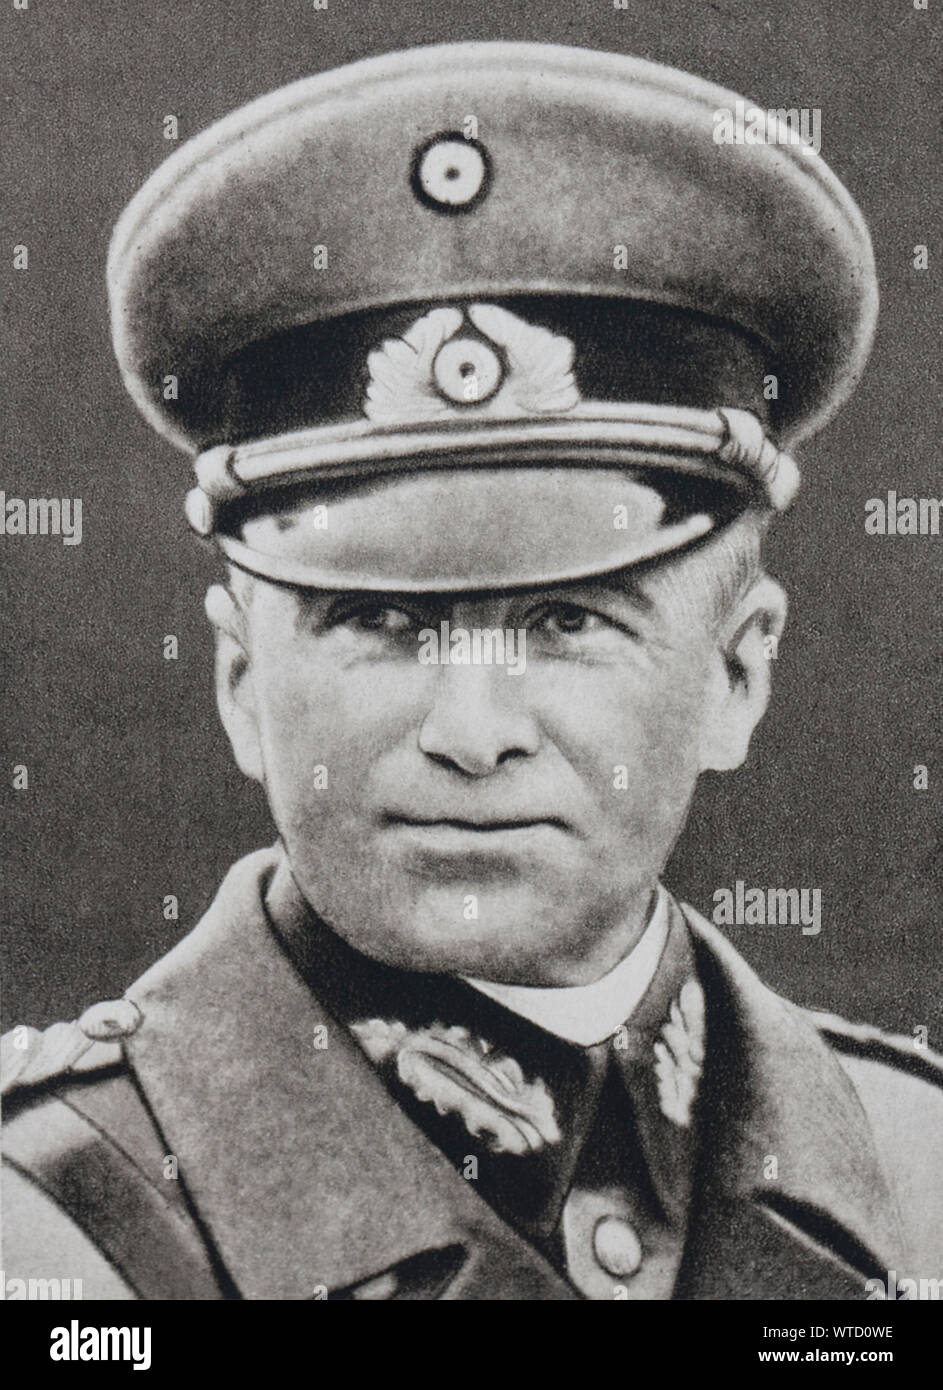 General Walther von Brauchitsch commander-in-chief of the German armies. WWII period Stock Photo